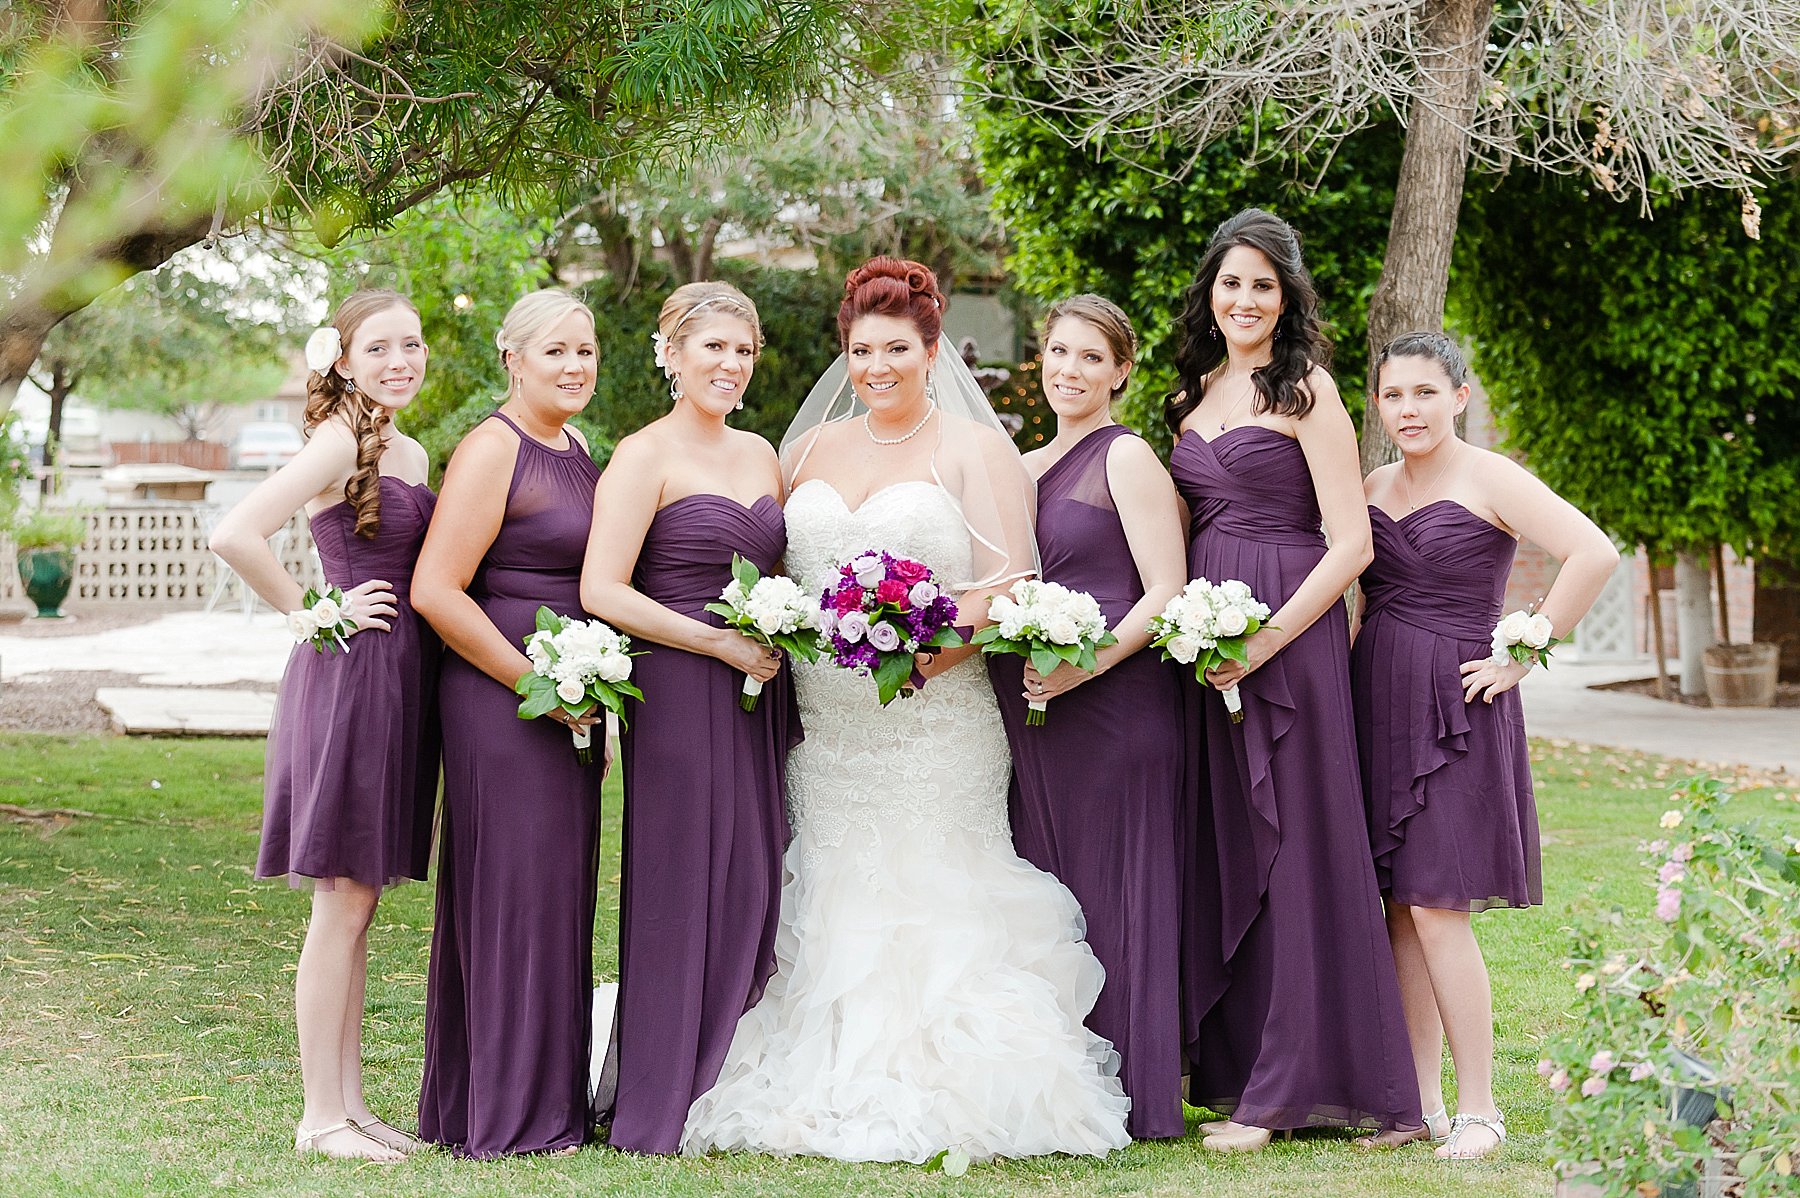 Old Town Wedding Center Bridesmaids in Garden Plum Dresses Peoria AZ Photo